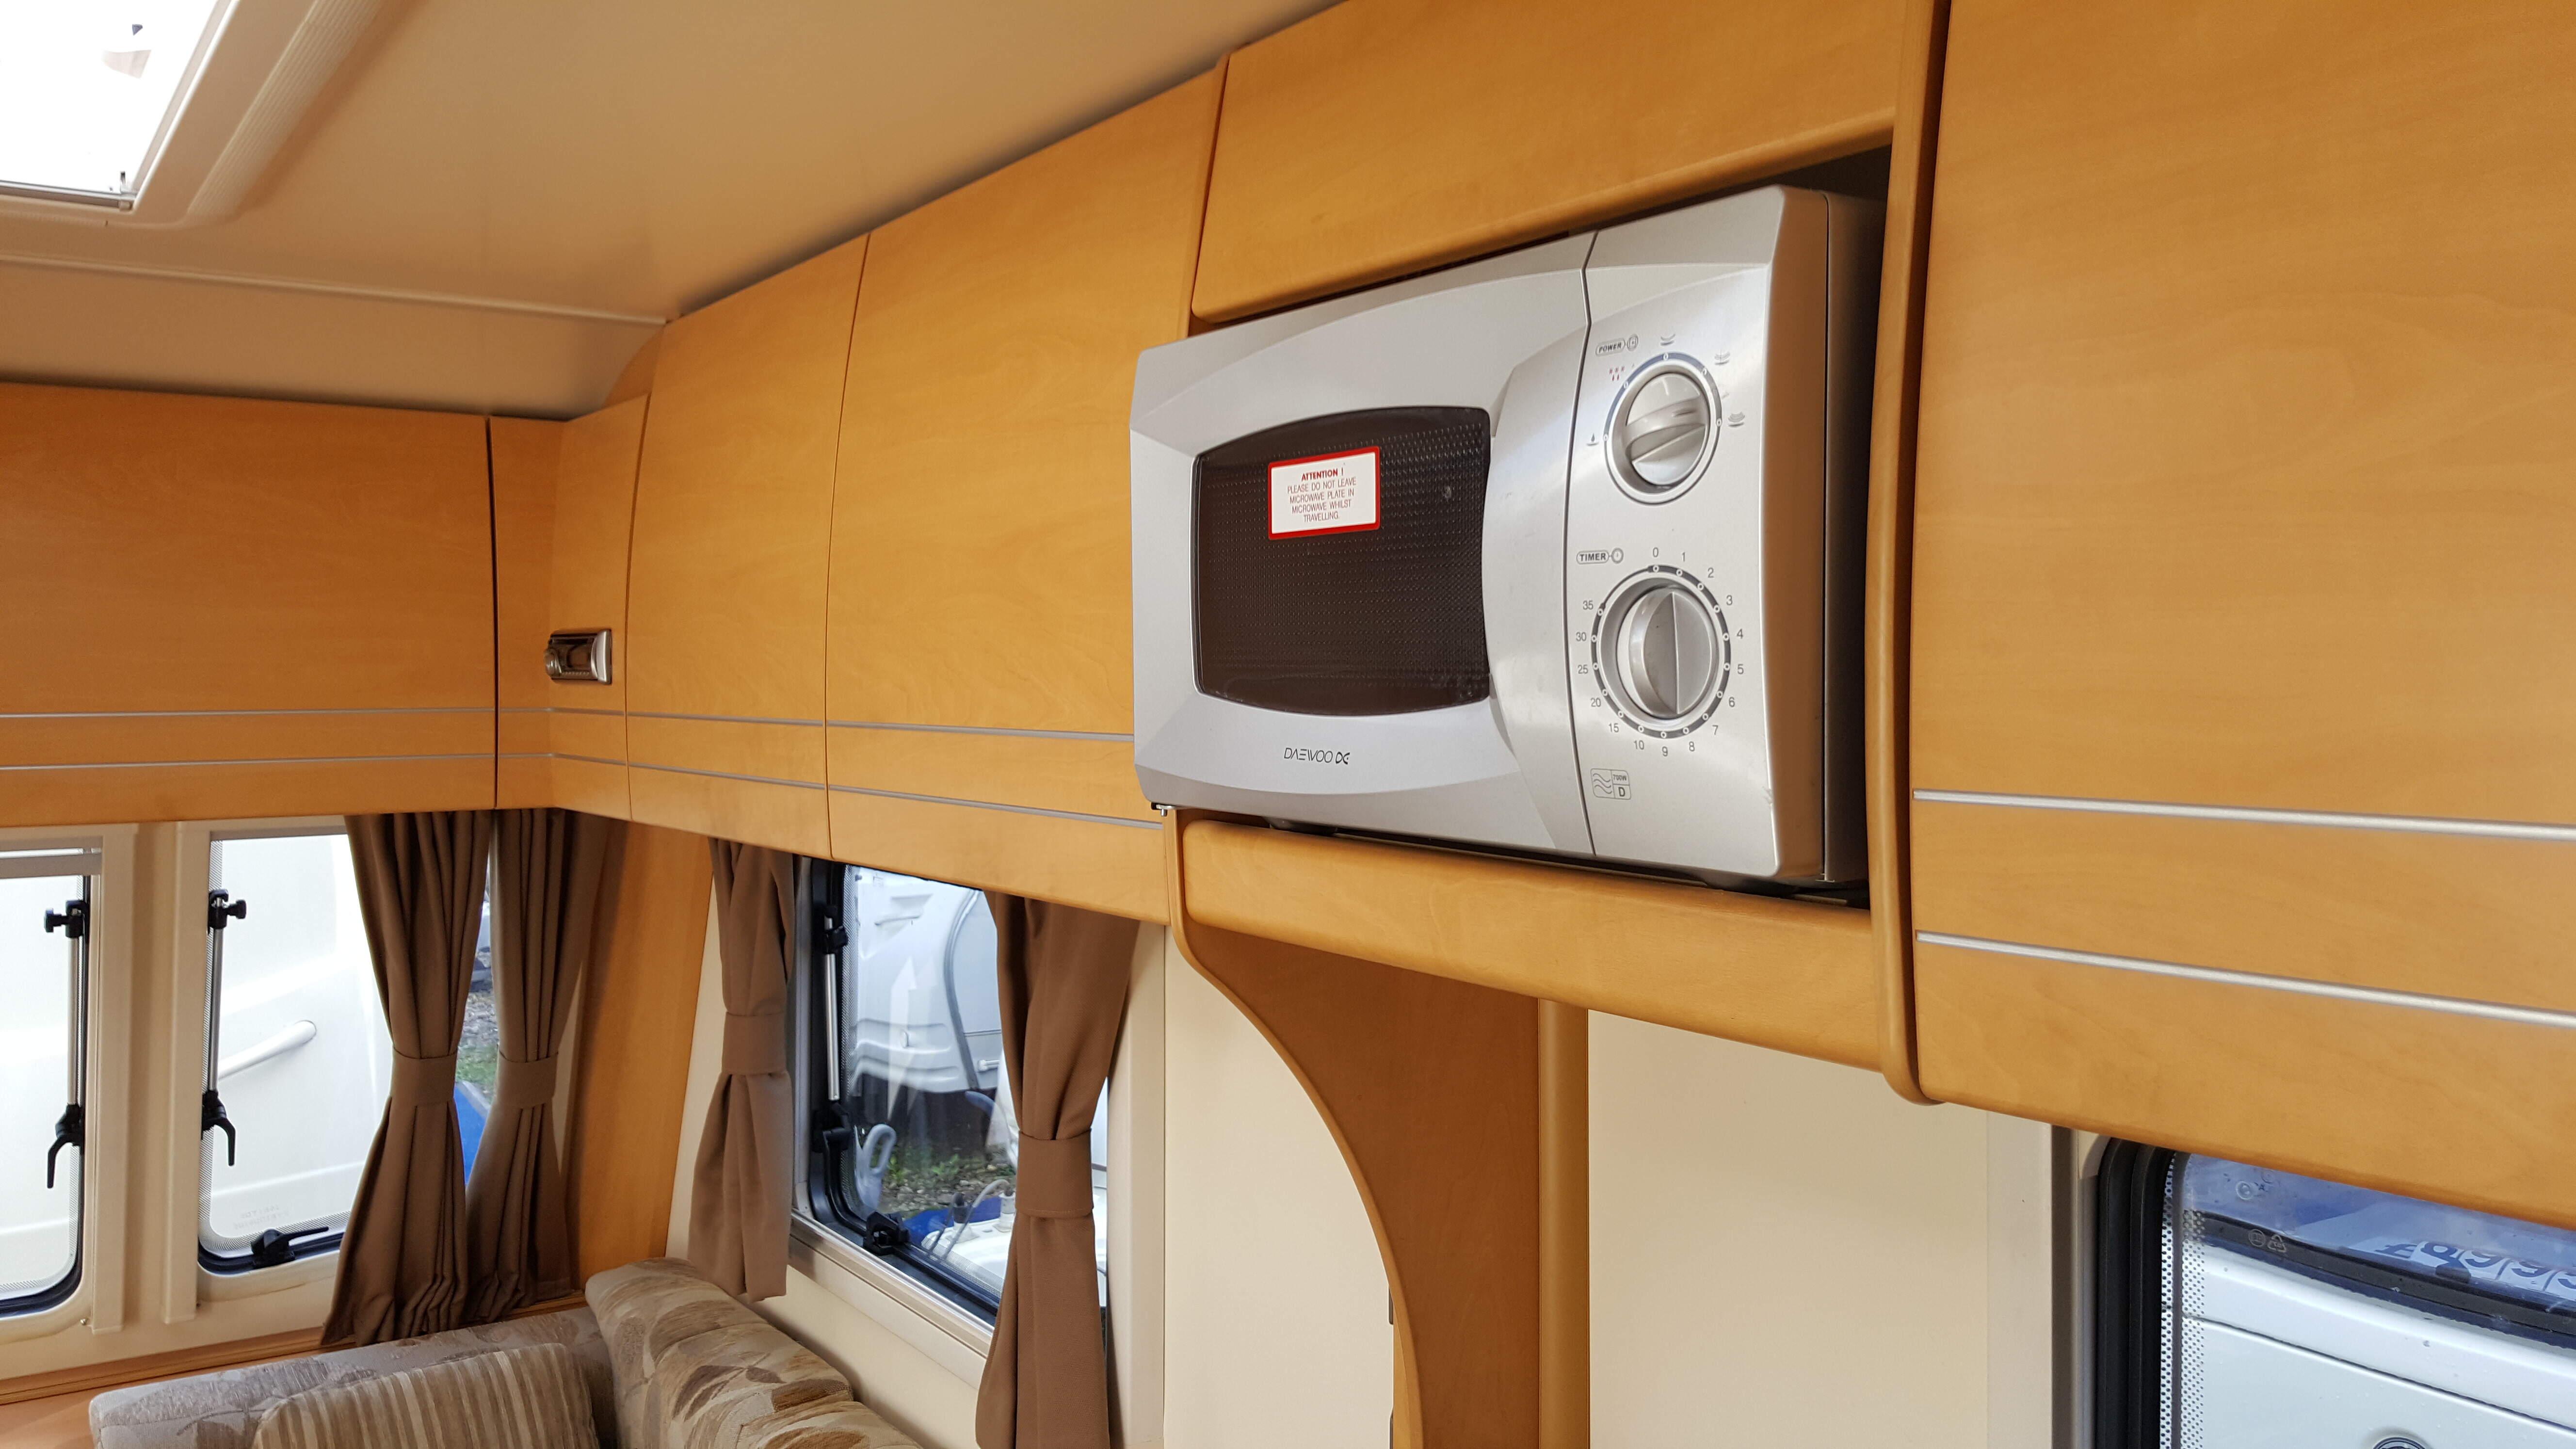 2011 Bailey Olympus 534 4 Berth Fixed Bed End Washroom Caravan